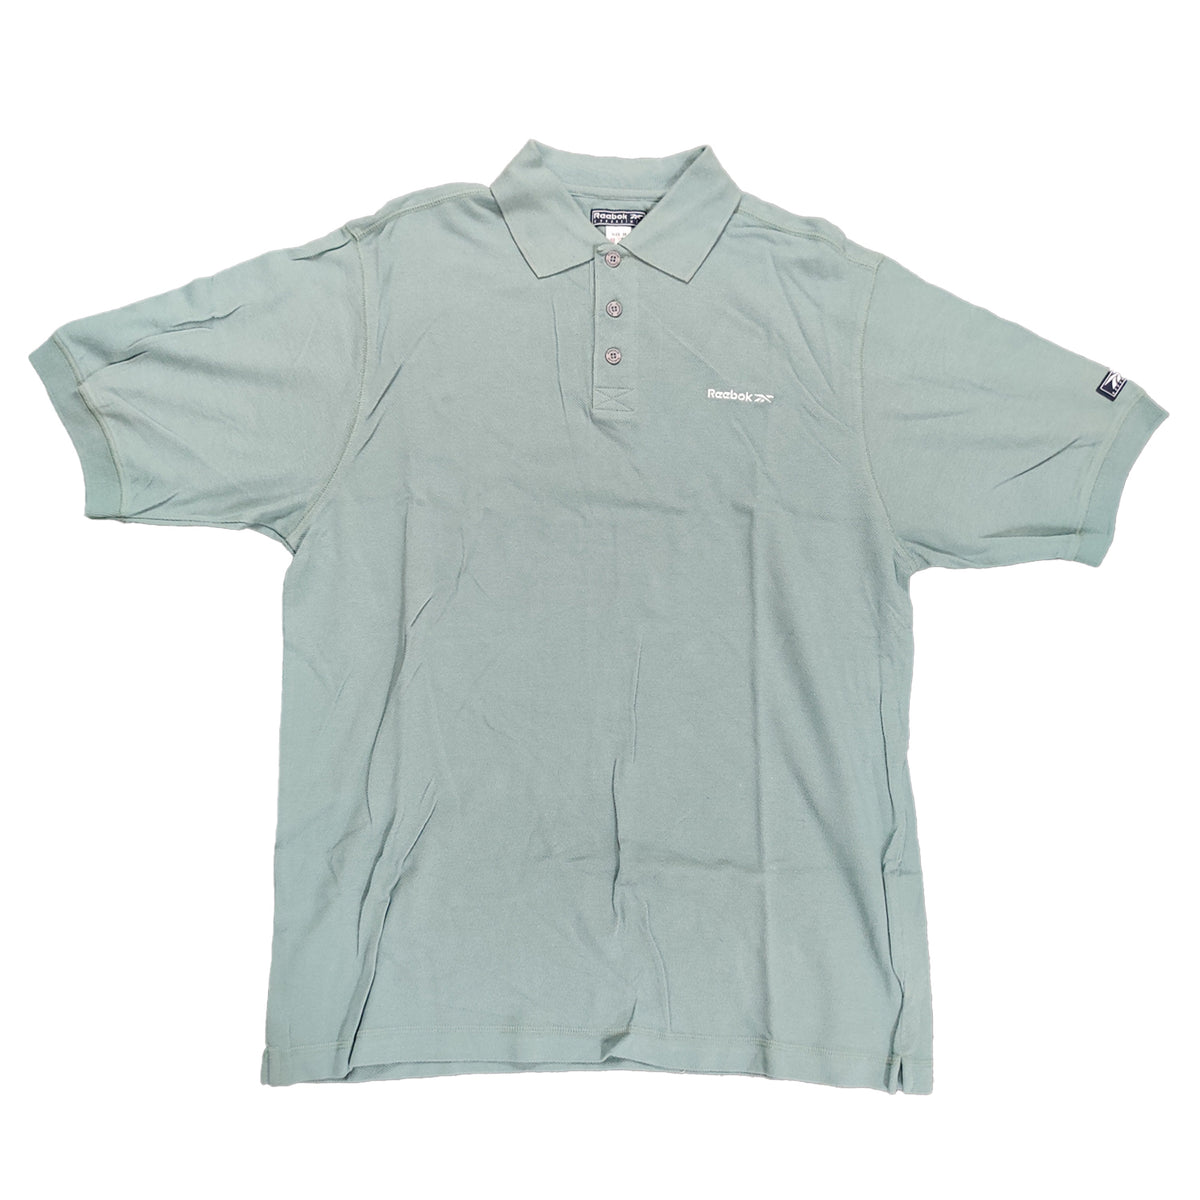 Reebok Mens Clearance Plain Turquoise Polo Shirt - Medium